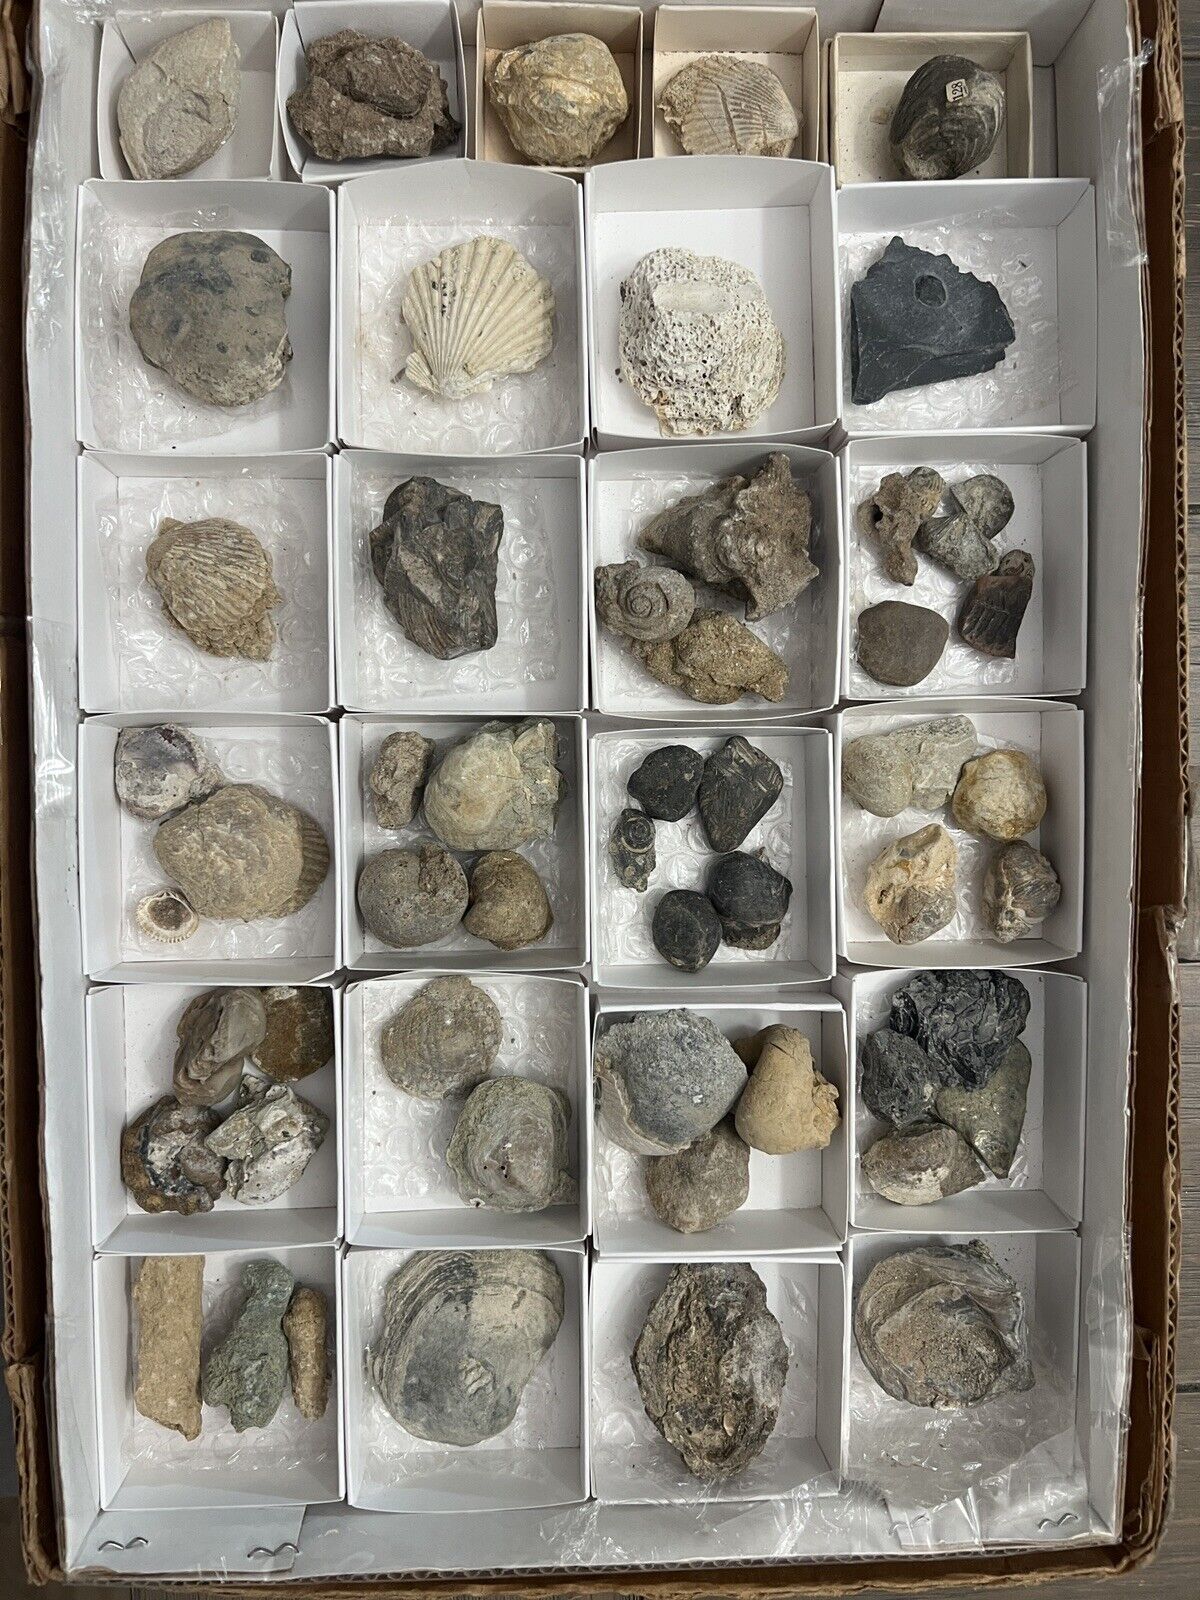 over 50 fossil flat super awesome fossil rocks lavic jasper agate shells fugulri